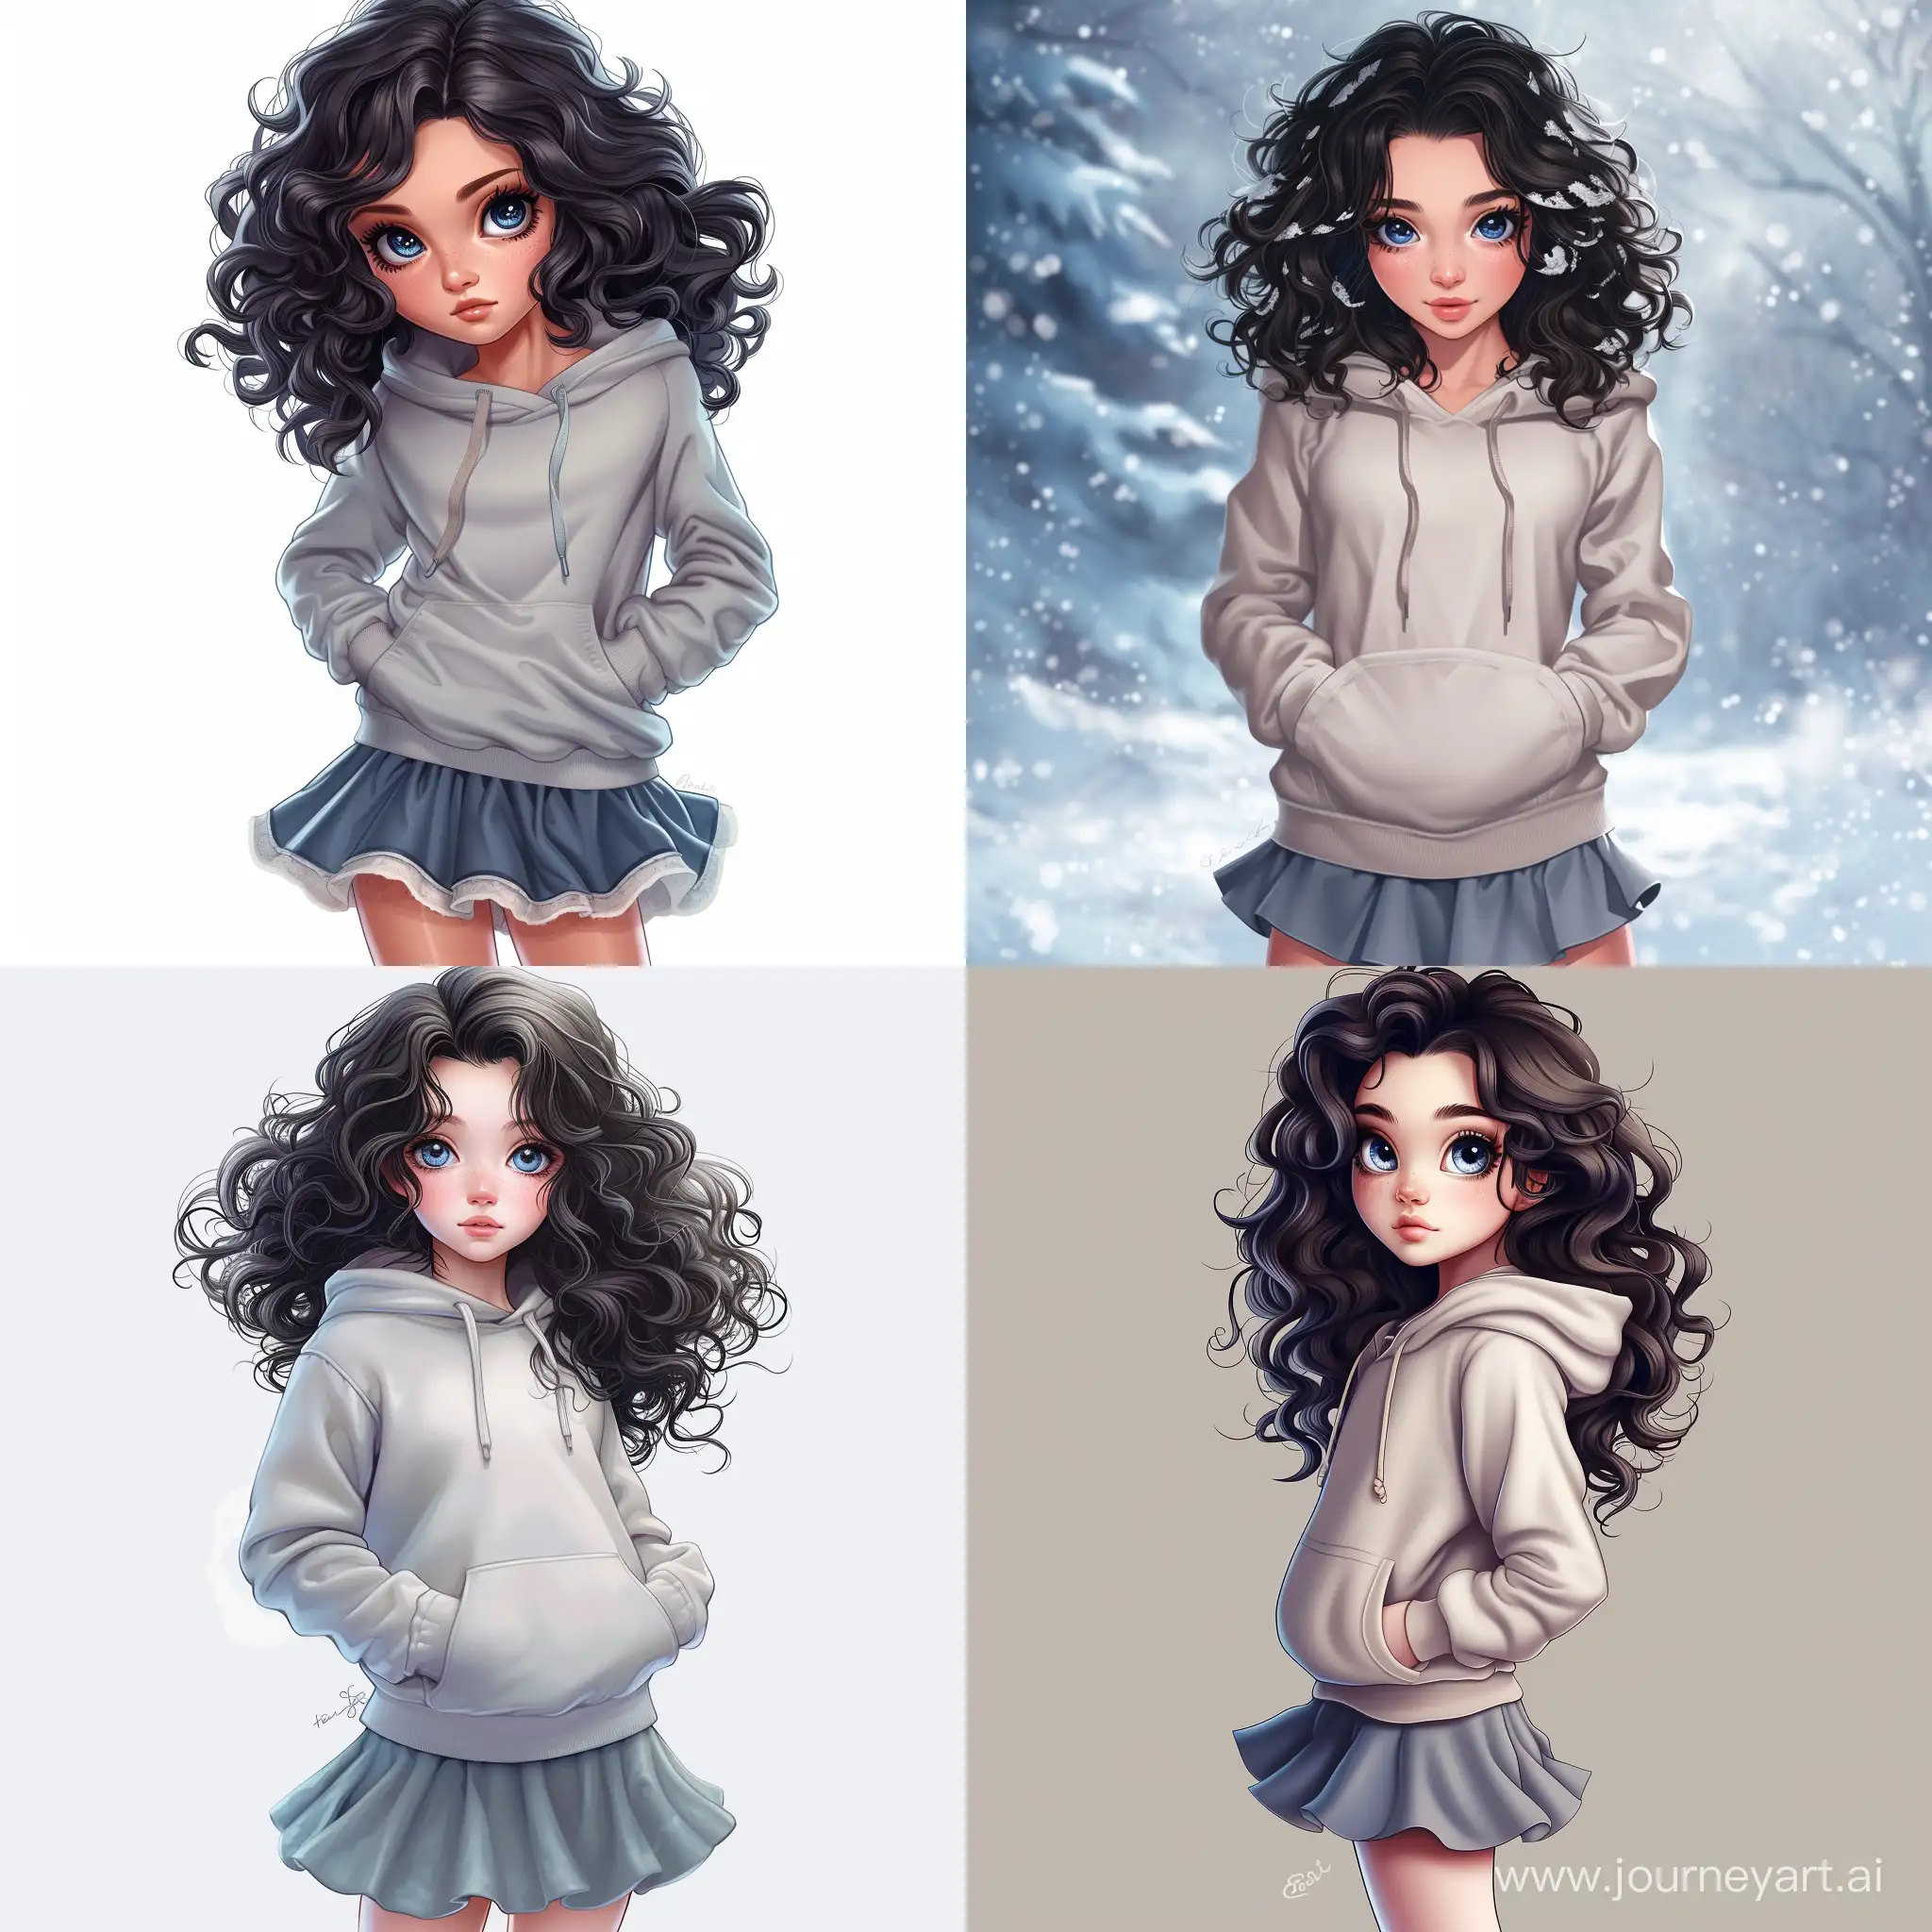 Beautiful girl, dark curly hair, sapphire eyes, snow-white skin, teenager, 14 years old, calm, in a hoodie and skirt, high quality, high detail, cartoon art